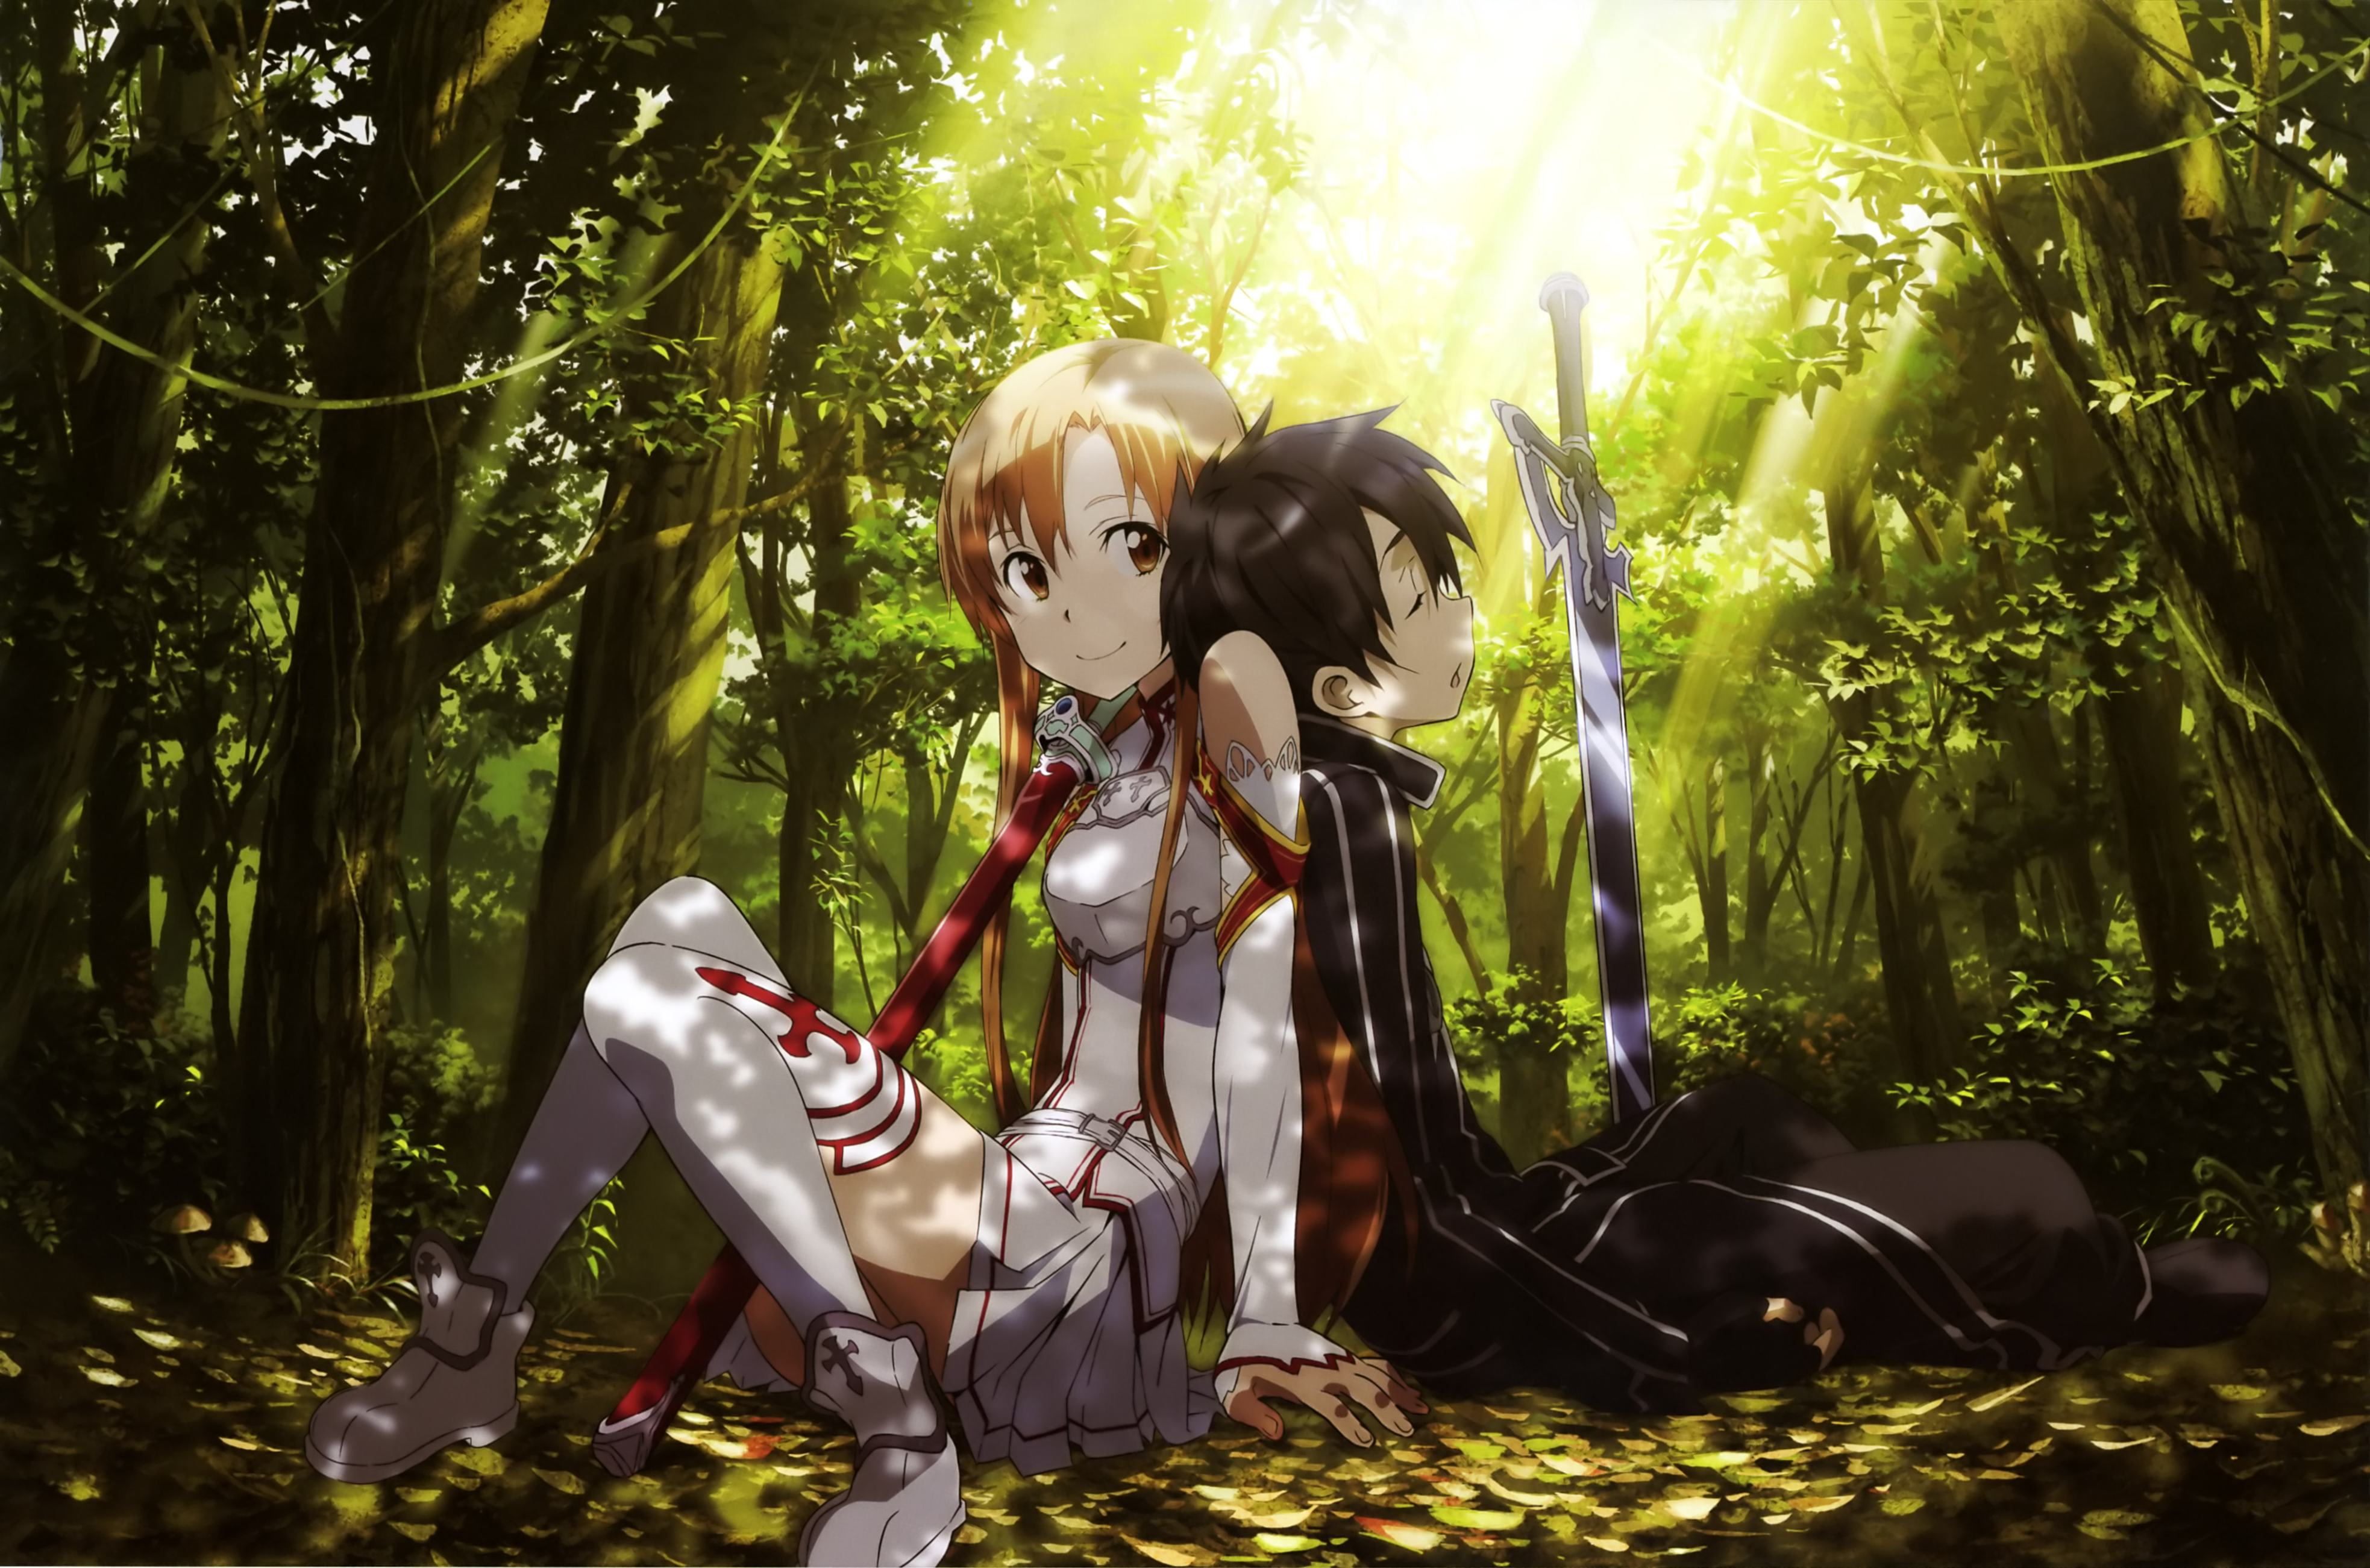 Anime 3933x2602 Sword Art Online Yuuki Asuna (Sword Art Online) trees sword knees together smiling Kirigaya Kazuto (Sword Art Online) couple